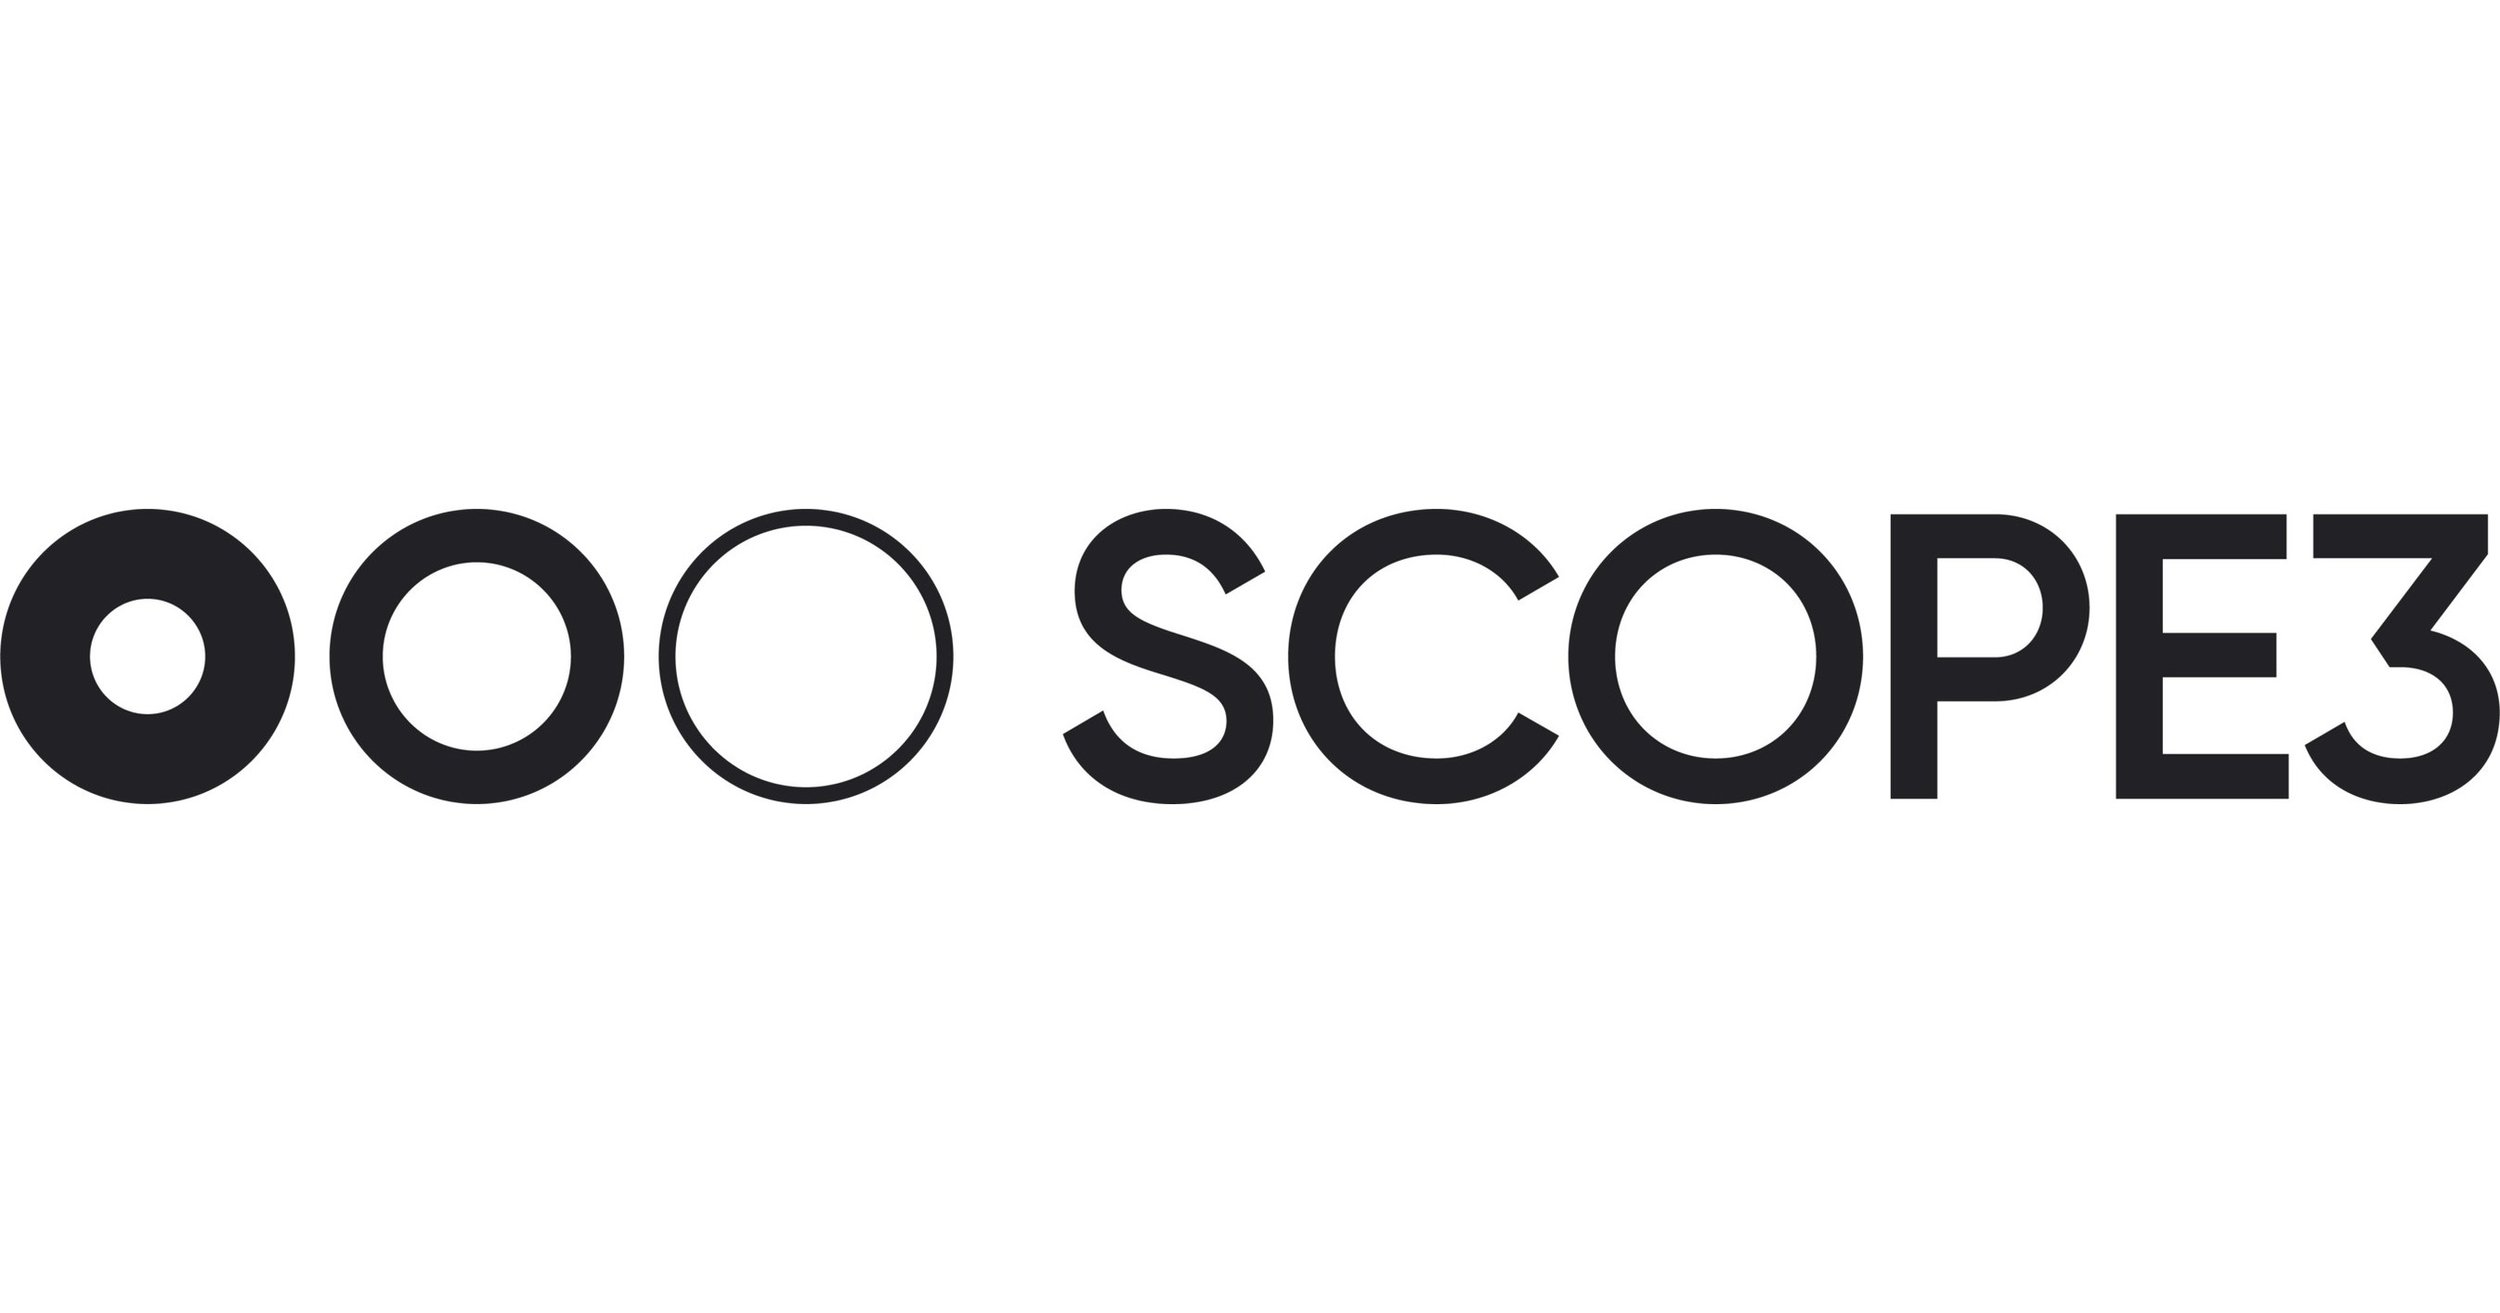 scopee3 logo.jpeg